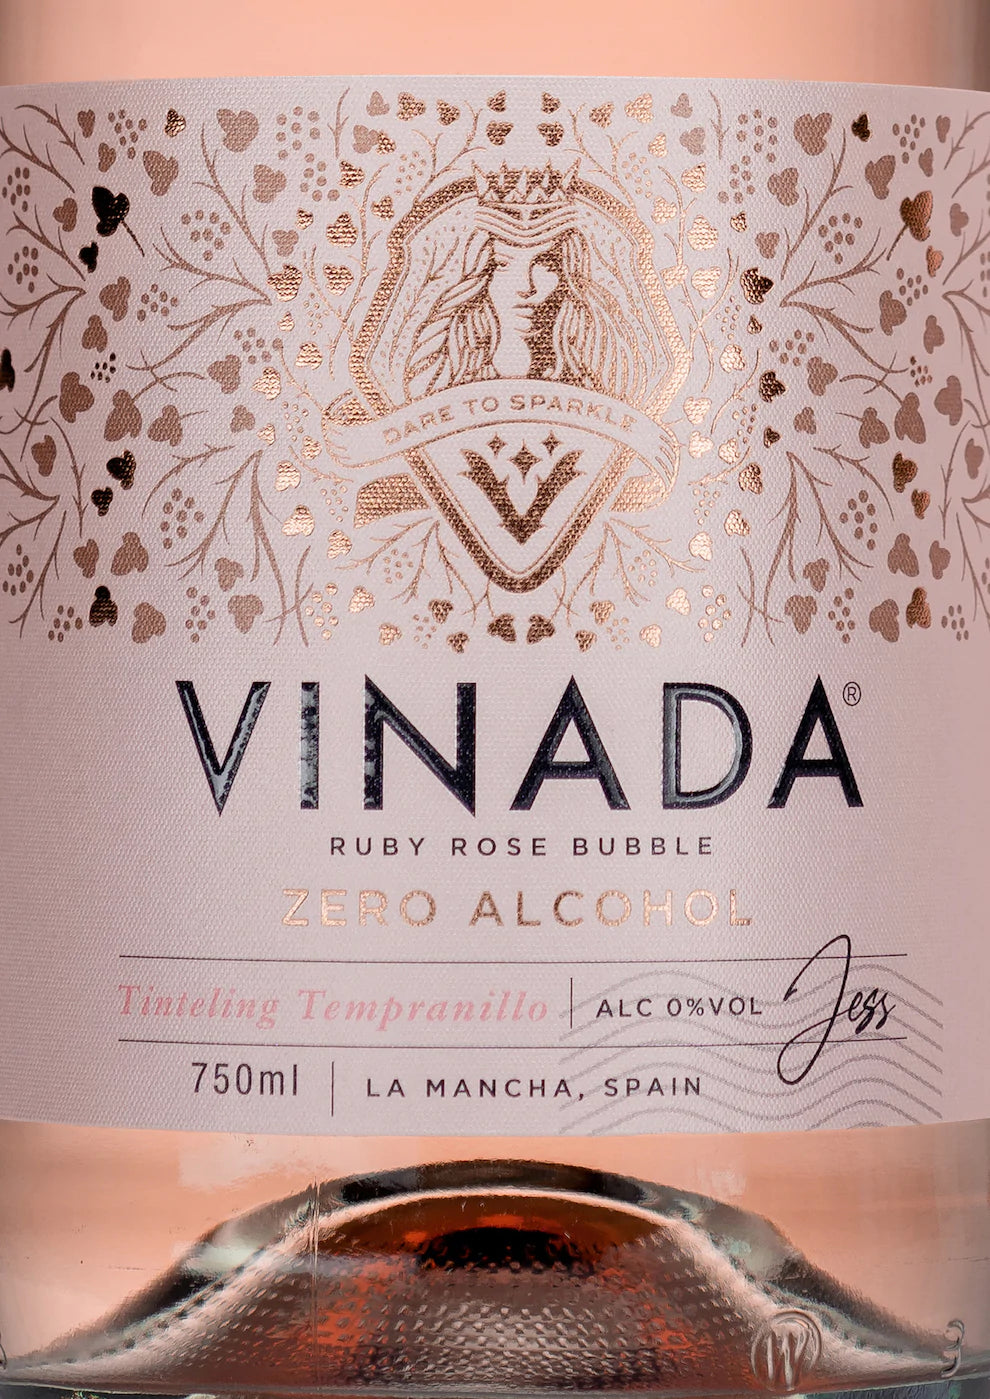 Vinada Ruby Rose Bubble Zero Alcohol Tinteling Tempranillo - La Mancha, Spain